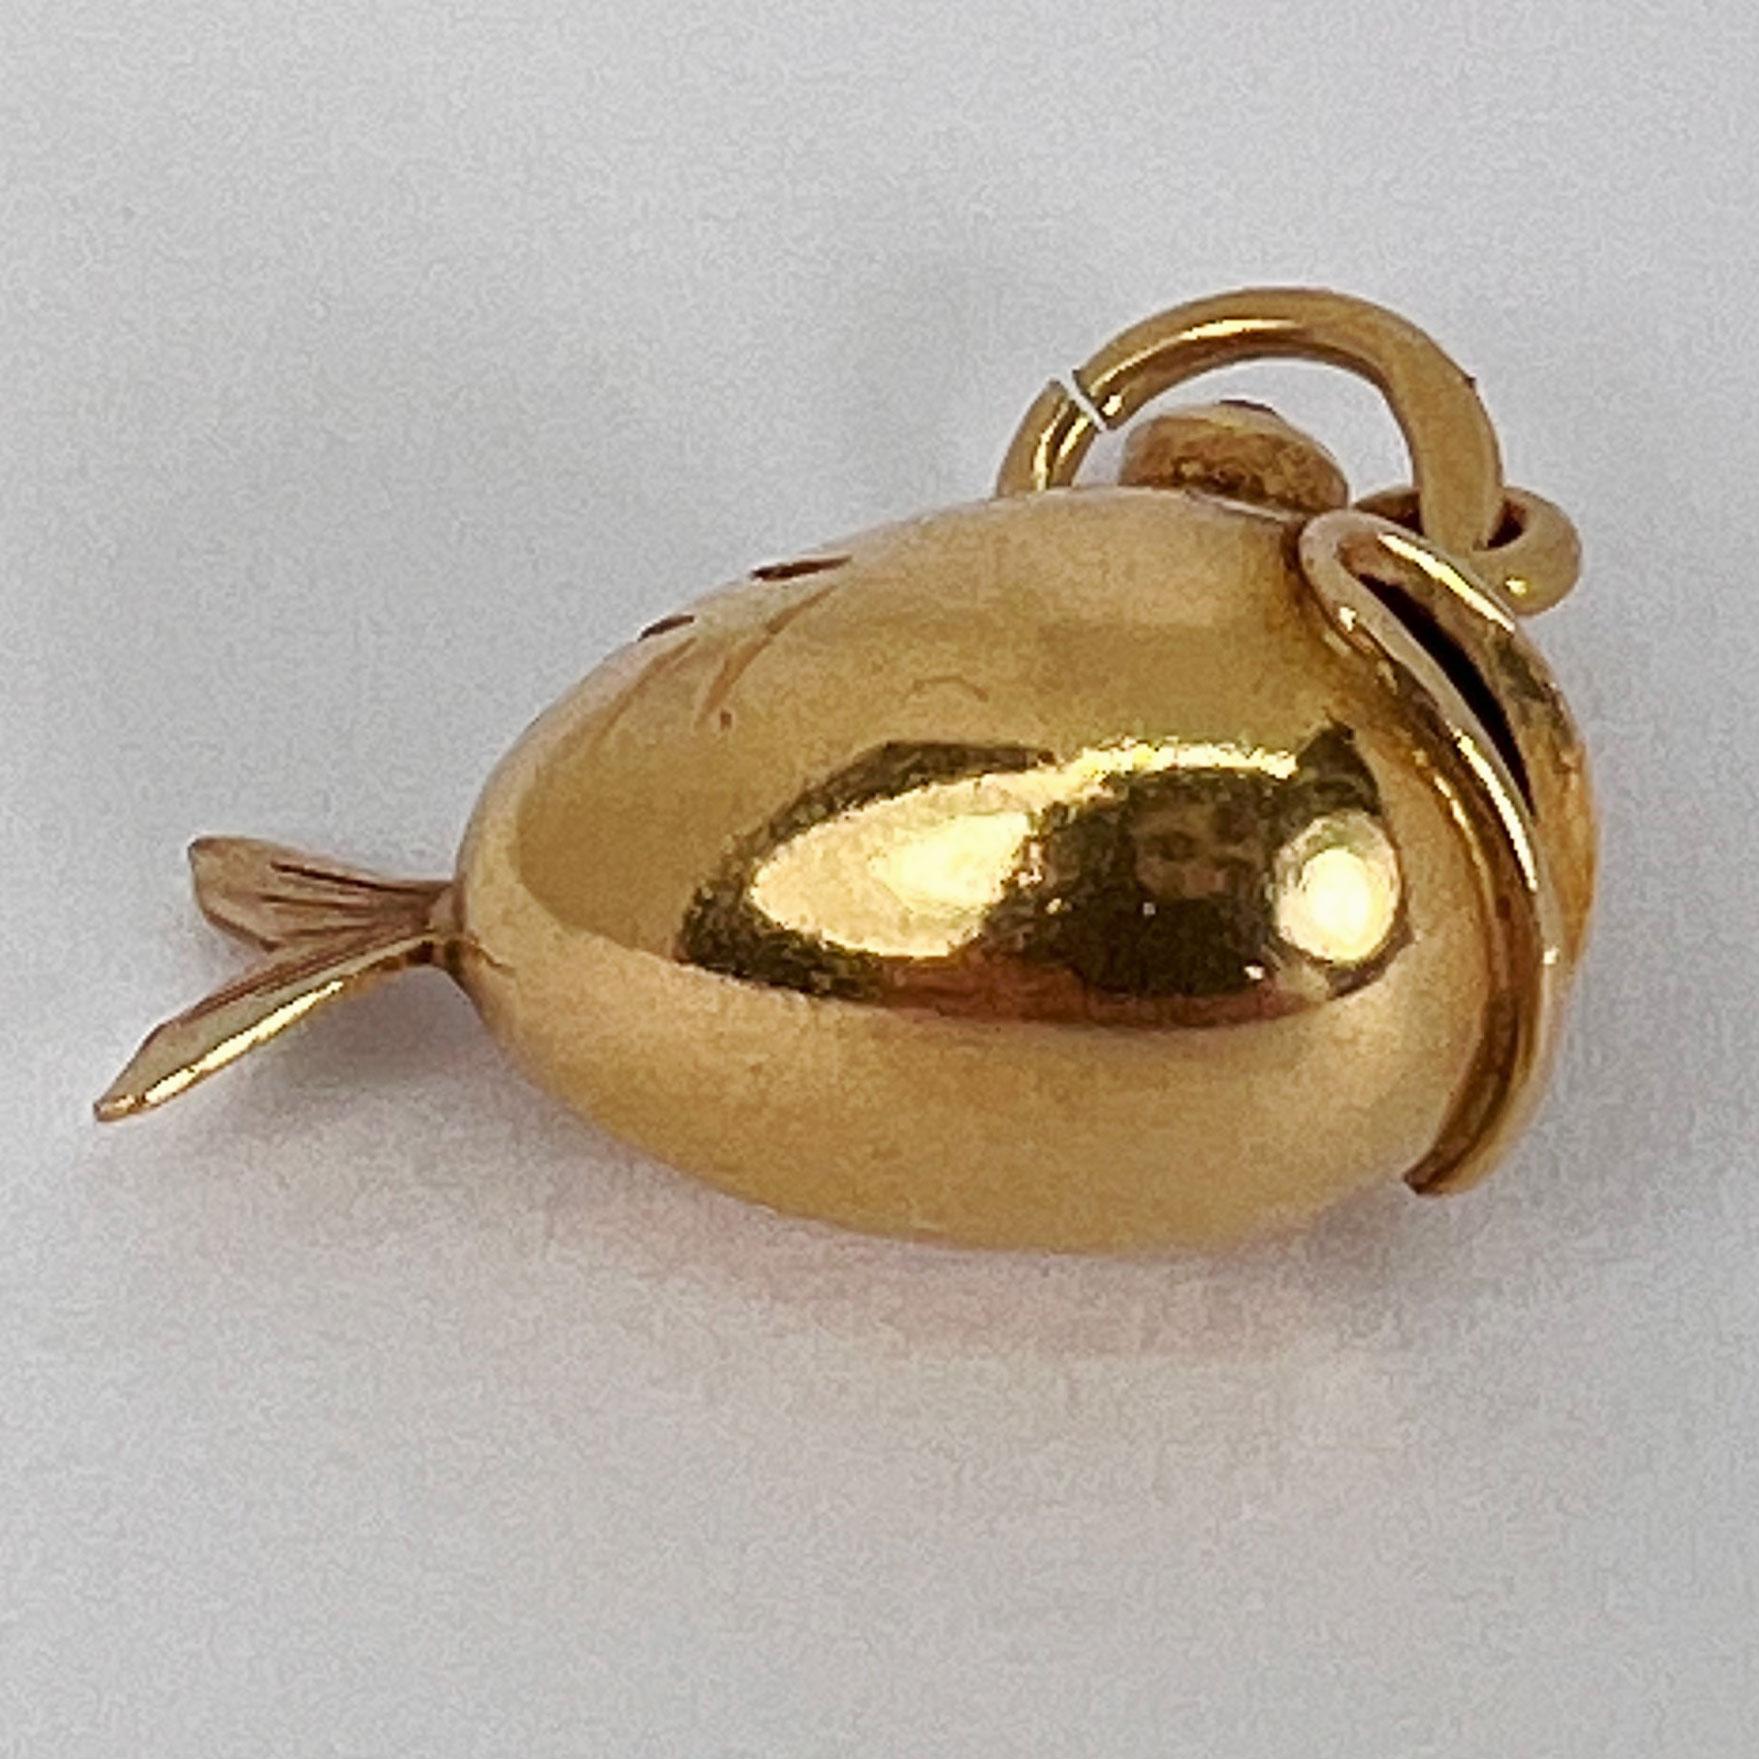 FOR CYNTHIA 18K Yellow Gold Fish Charm Pendant 10